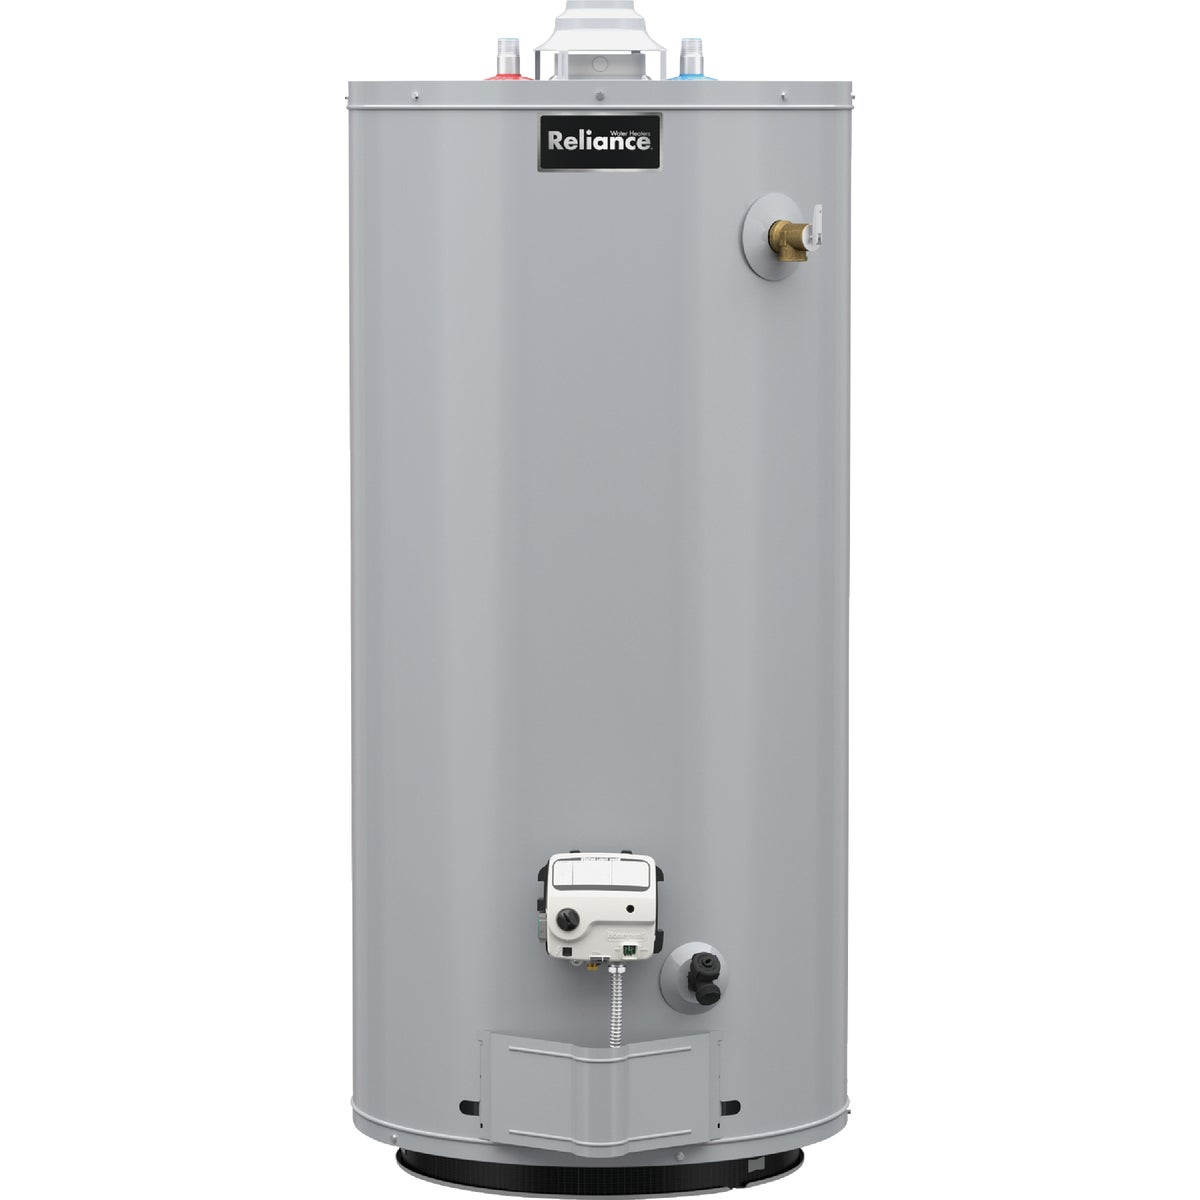 NBCS Reliance Natural Gas Water Heater